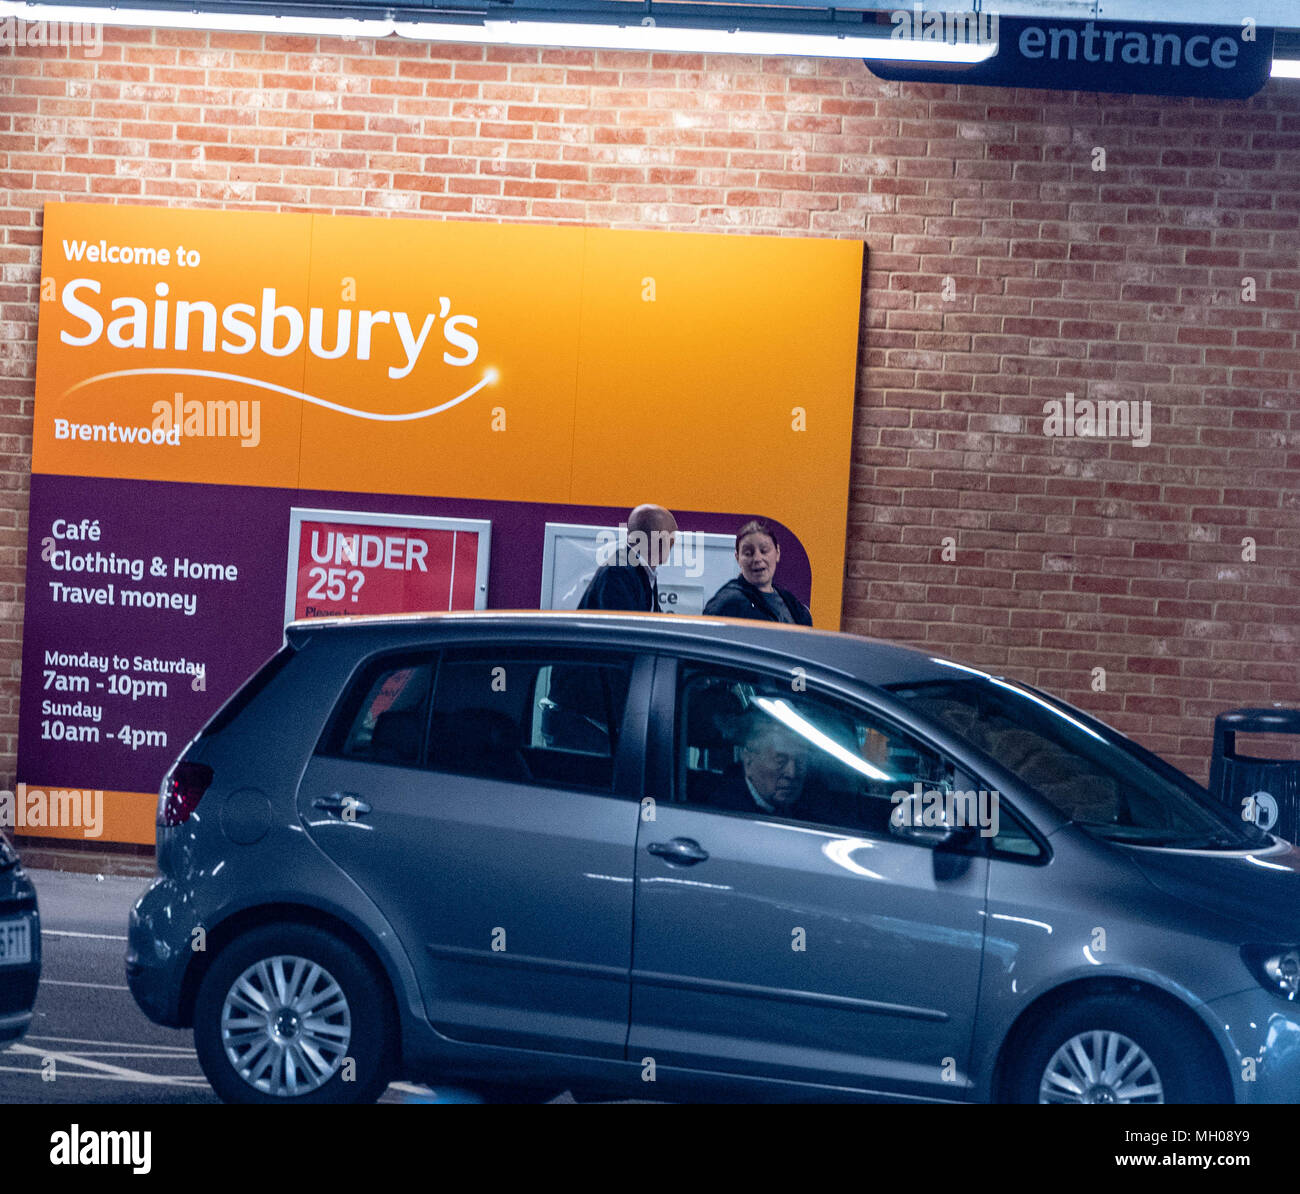 Sainsbury's und Asda die Fusion Sainsbury Brentwood signage Stockfoto